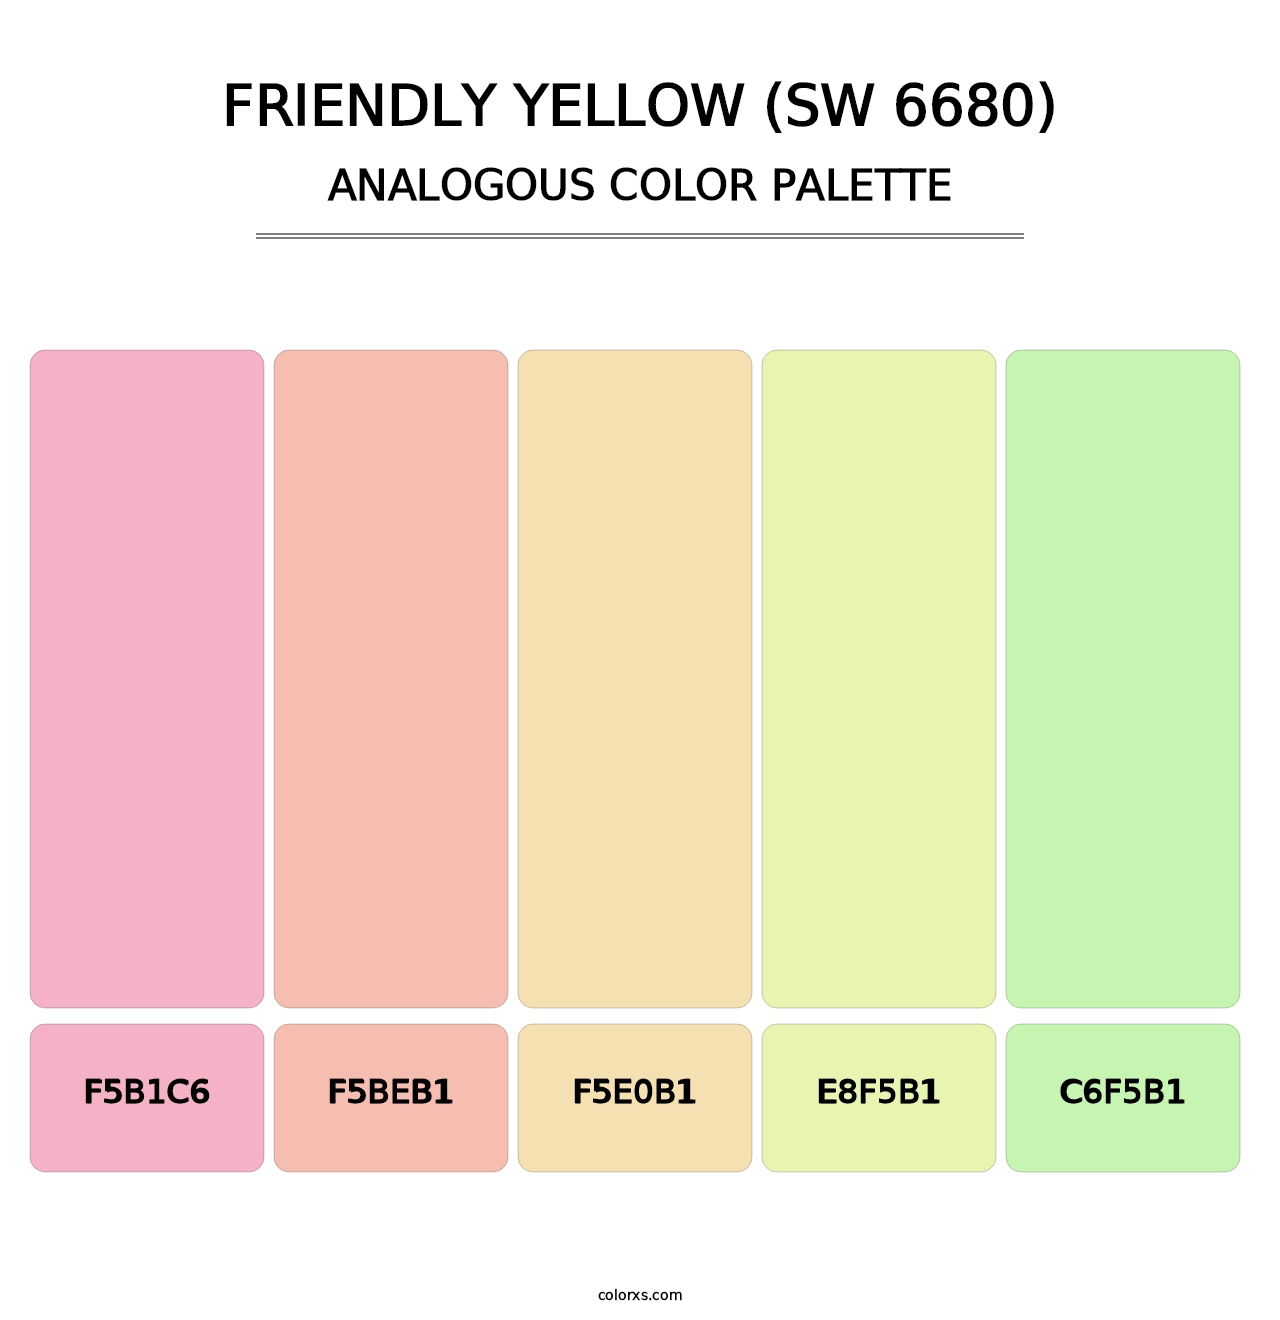 Friendly Yellow (SW 6680) - Analogous Color Palette